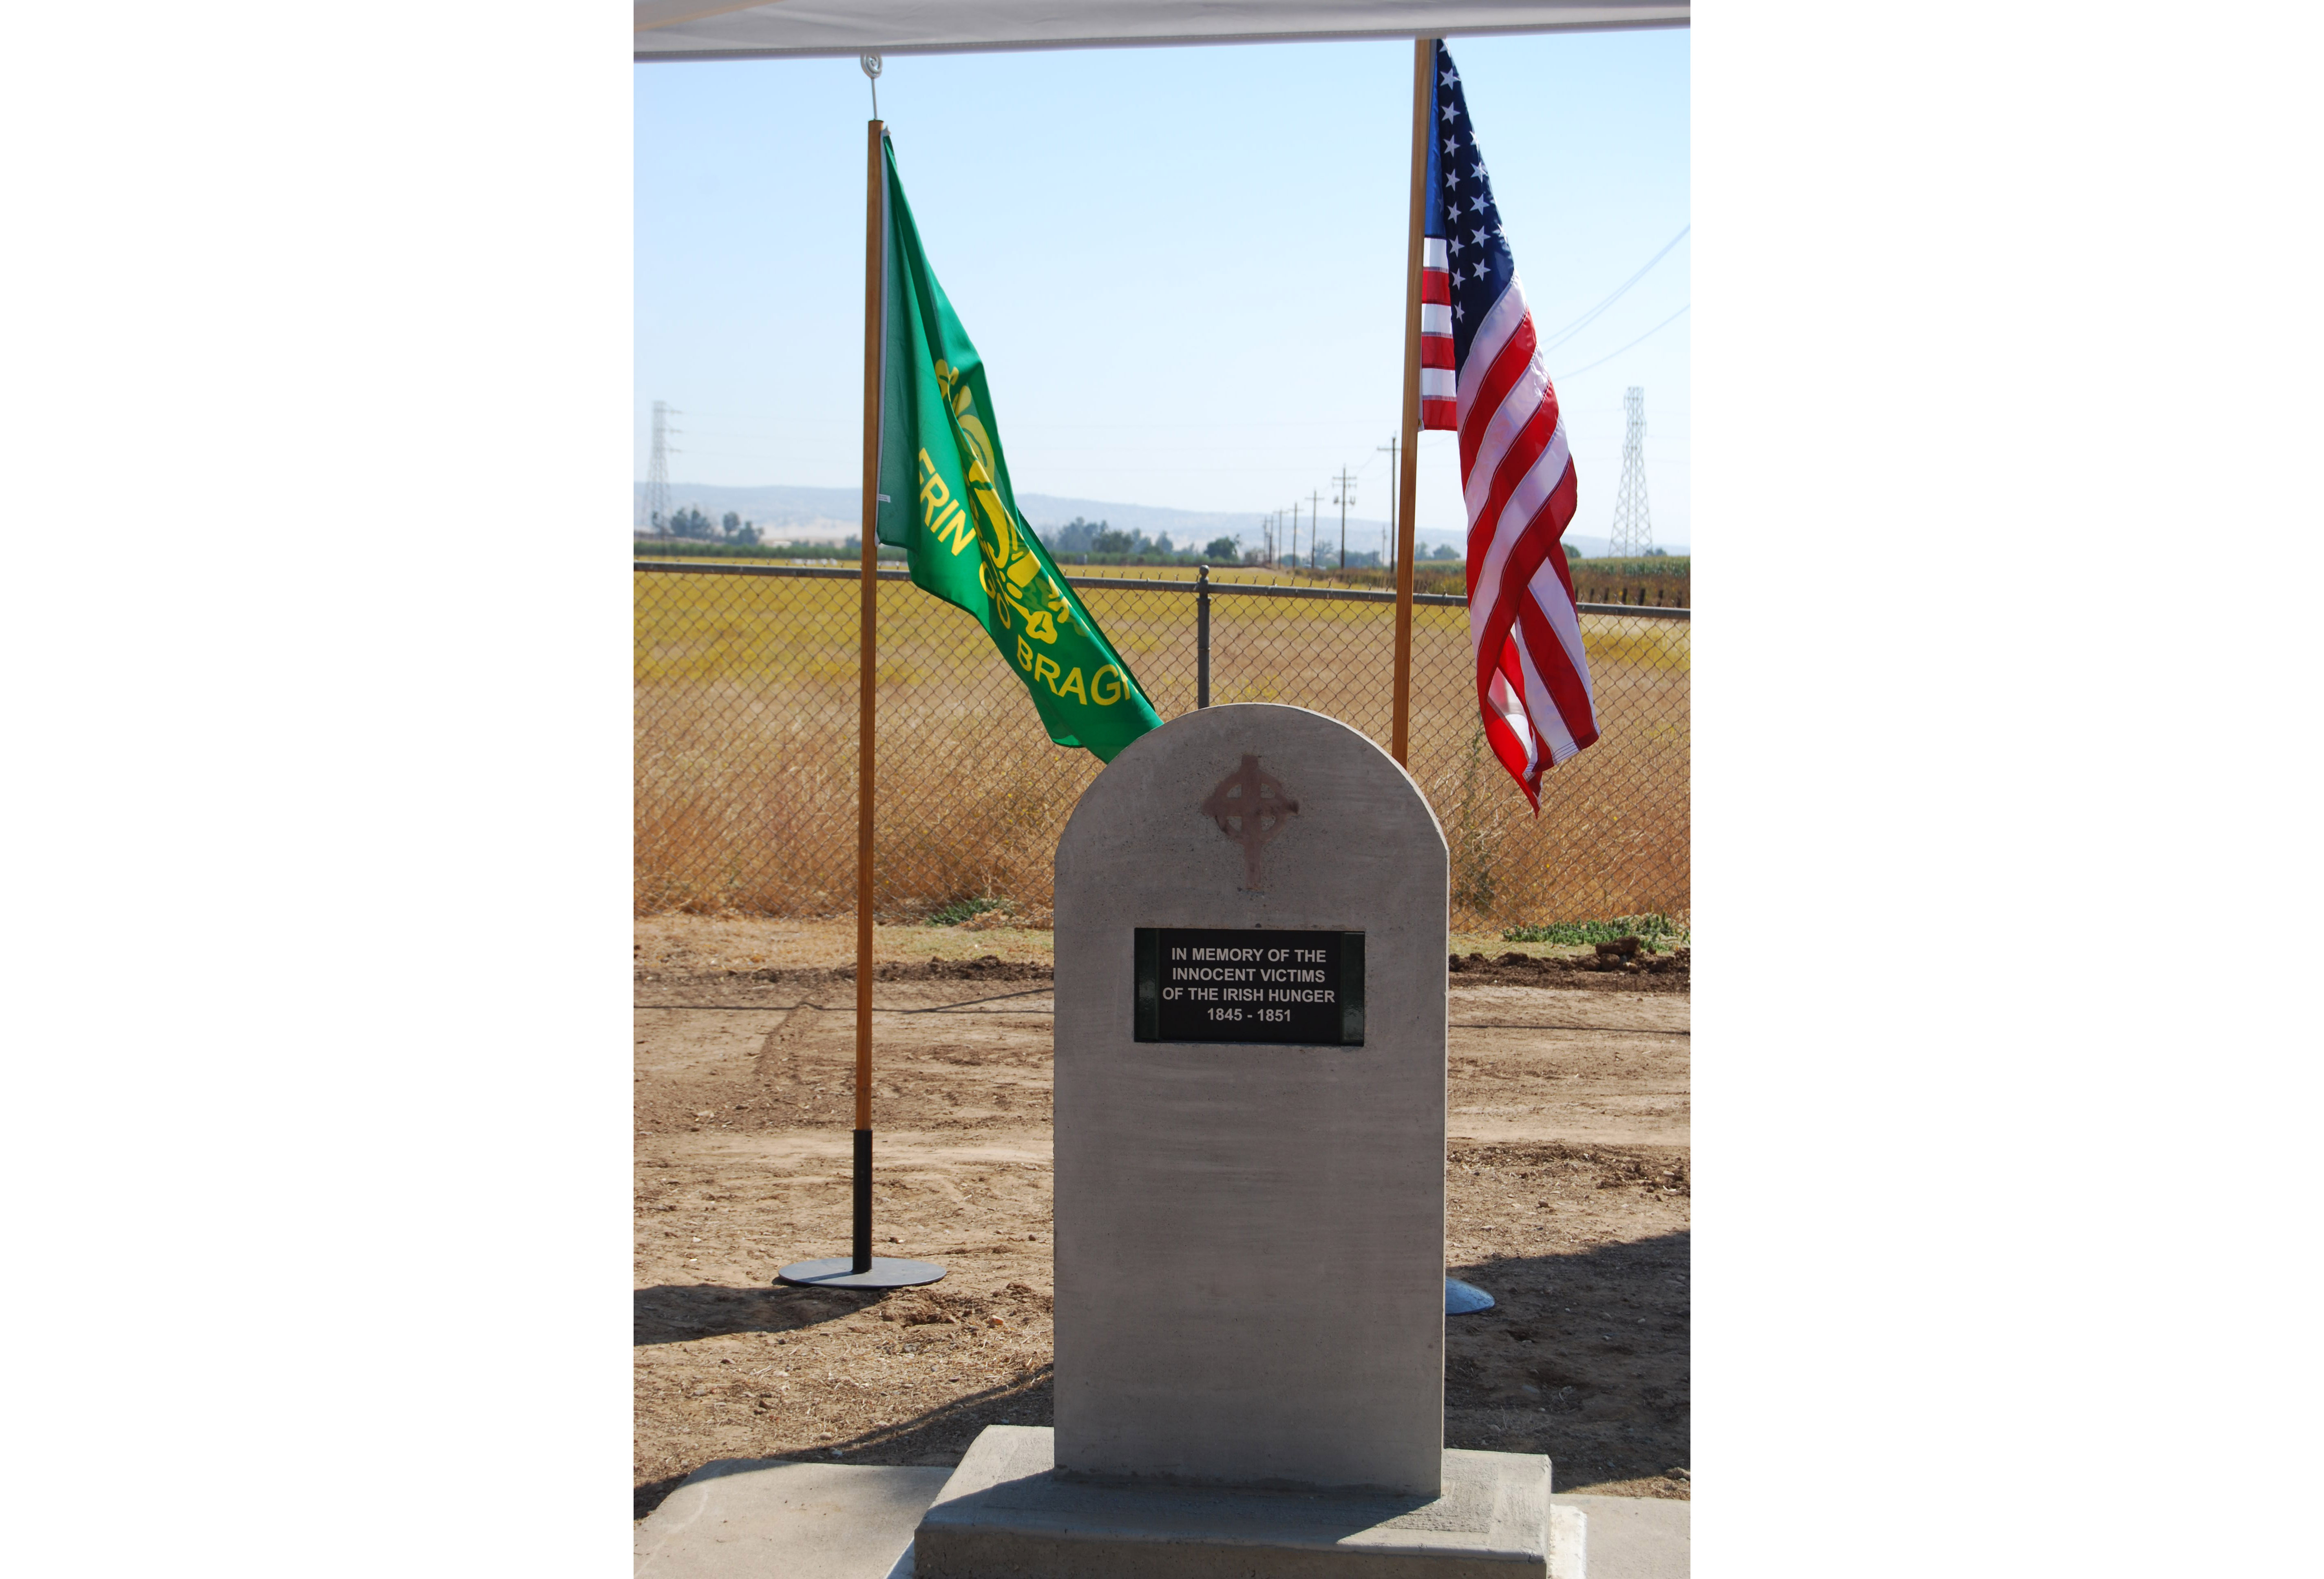 A view of California's first Irish Hunger Memorial.